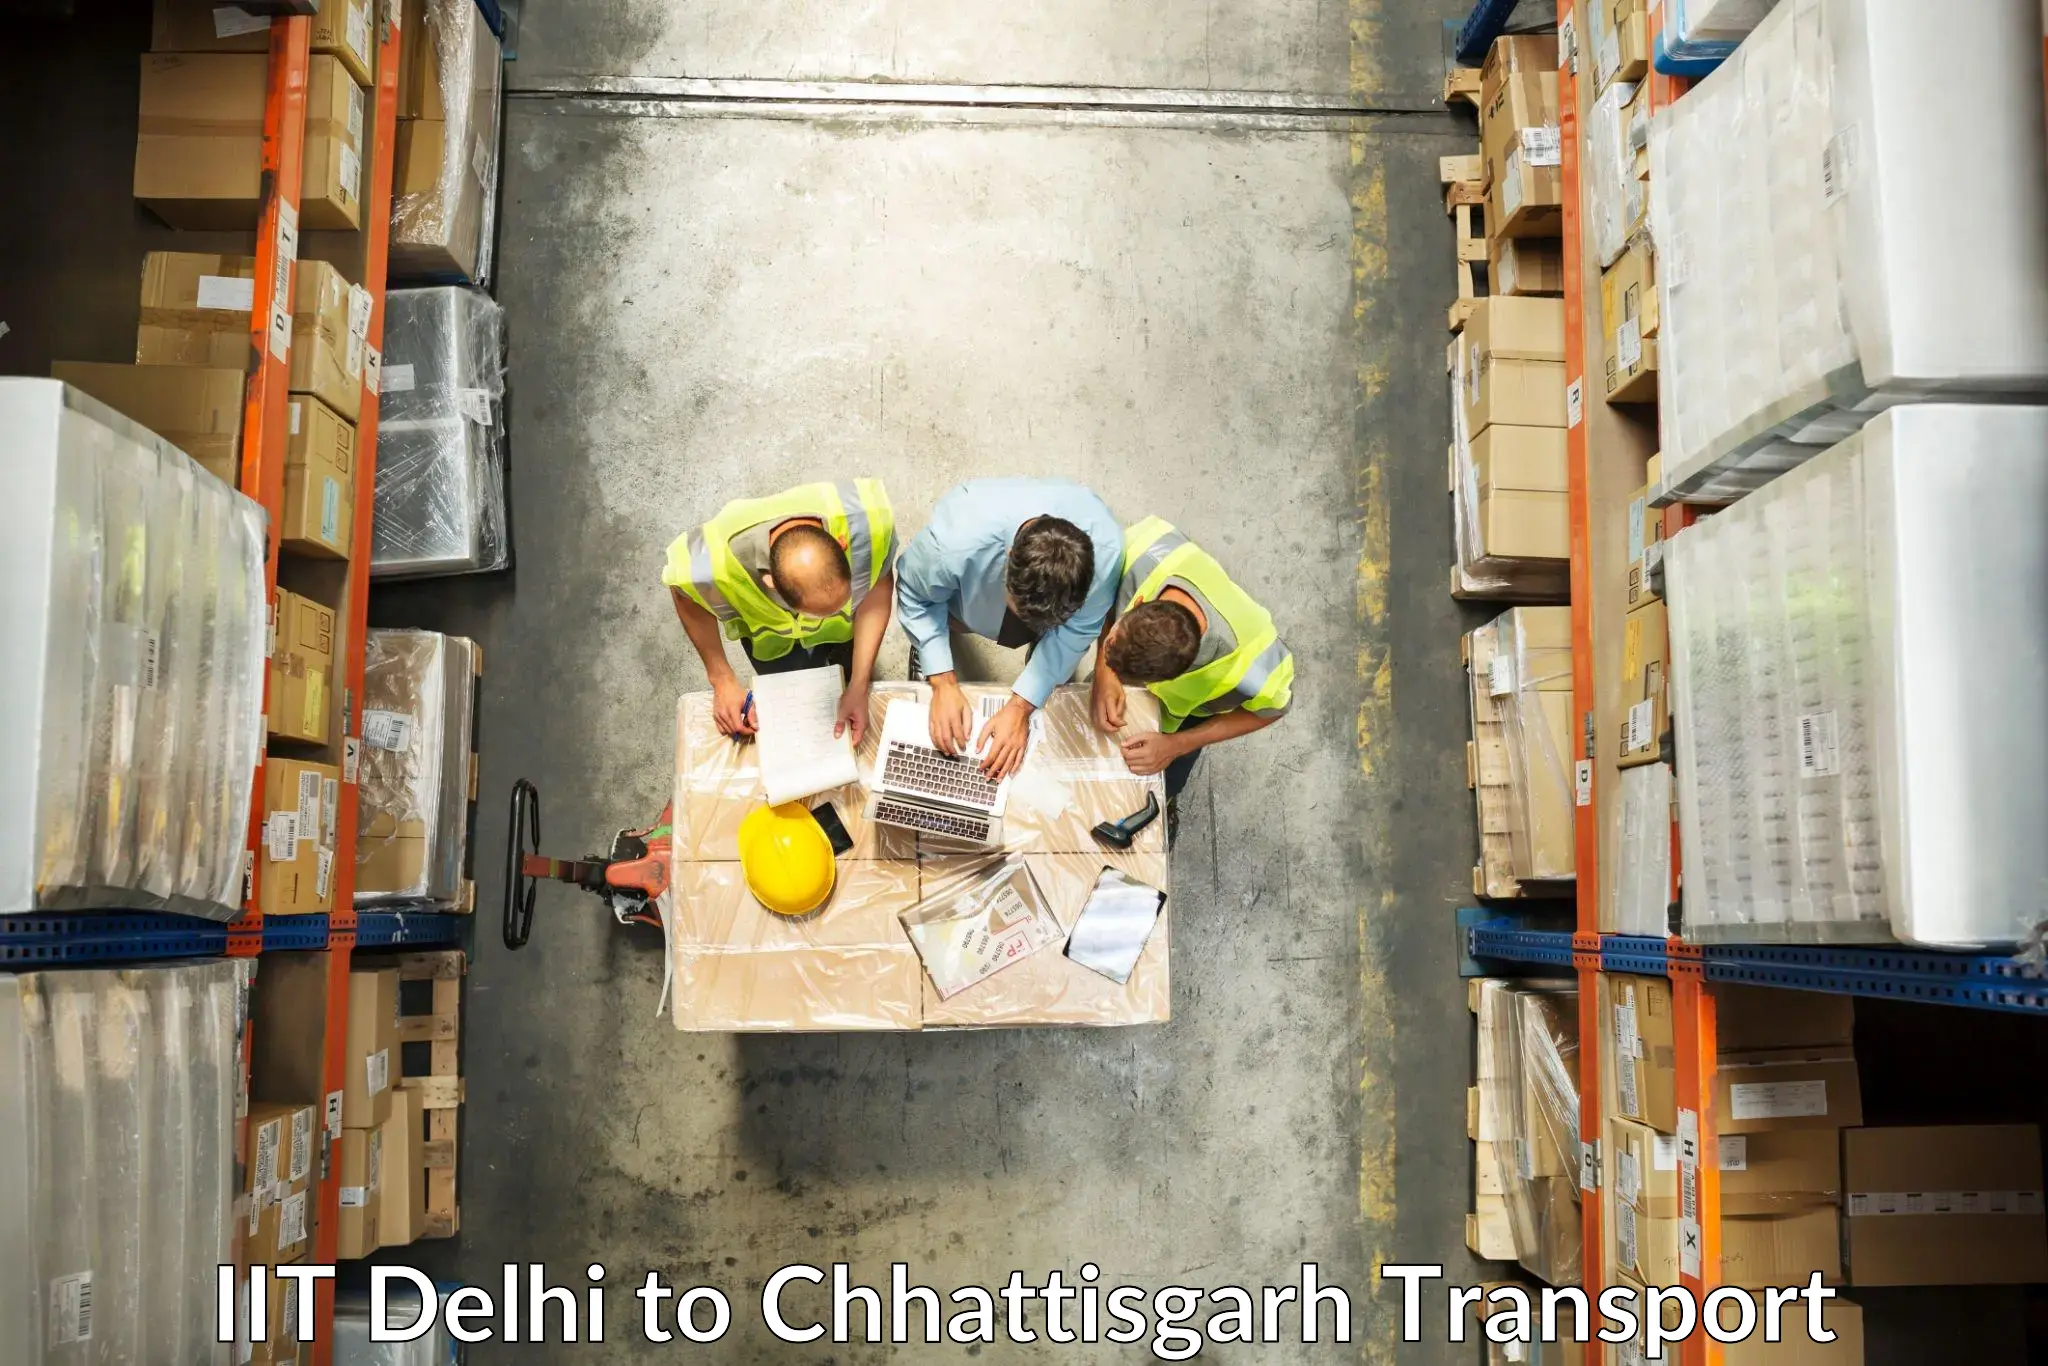 Sending bike to another city IIT Delhi to Chhattisgarh